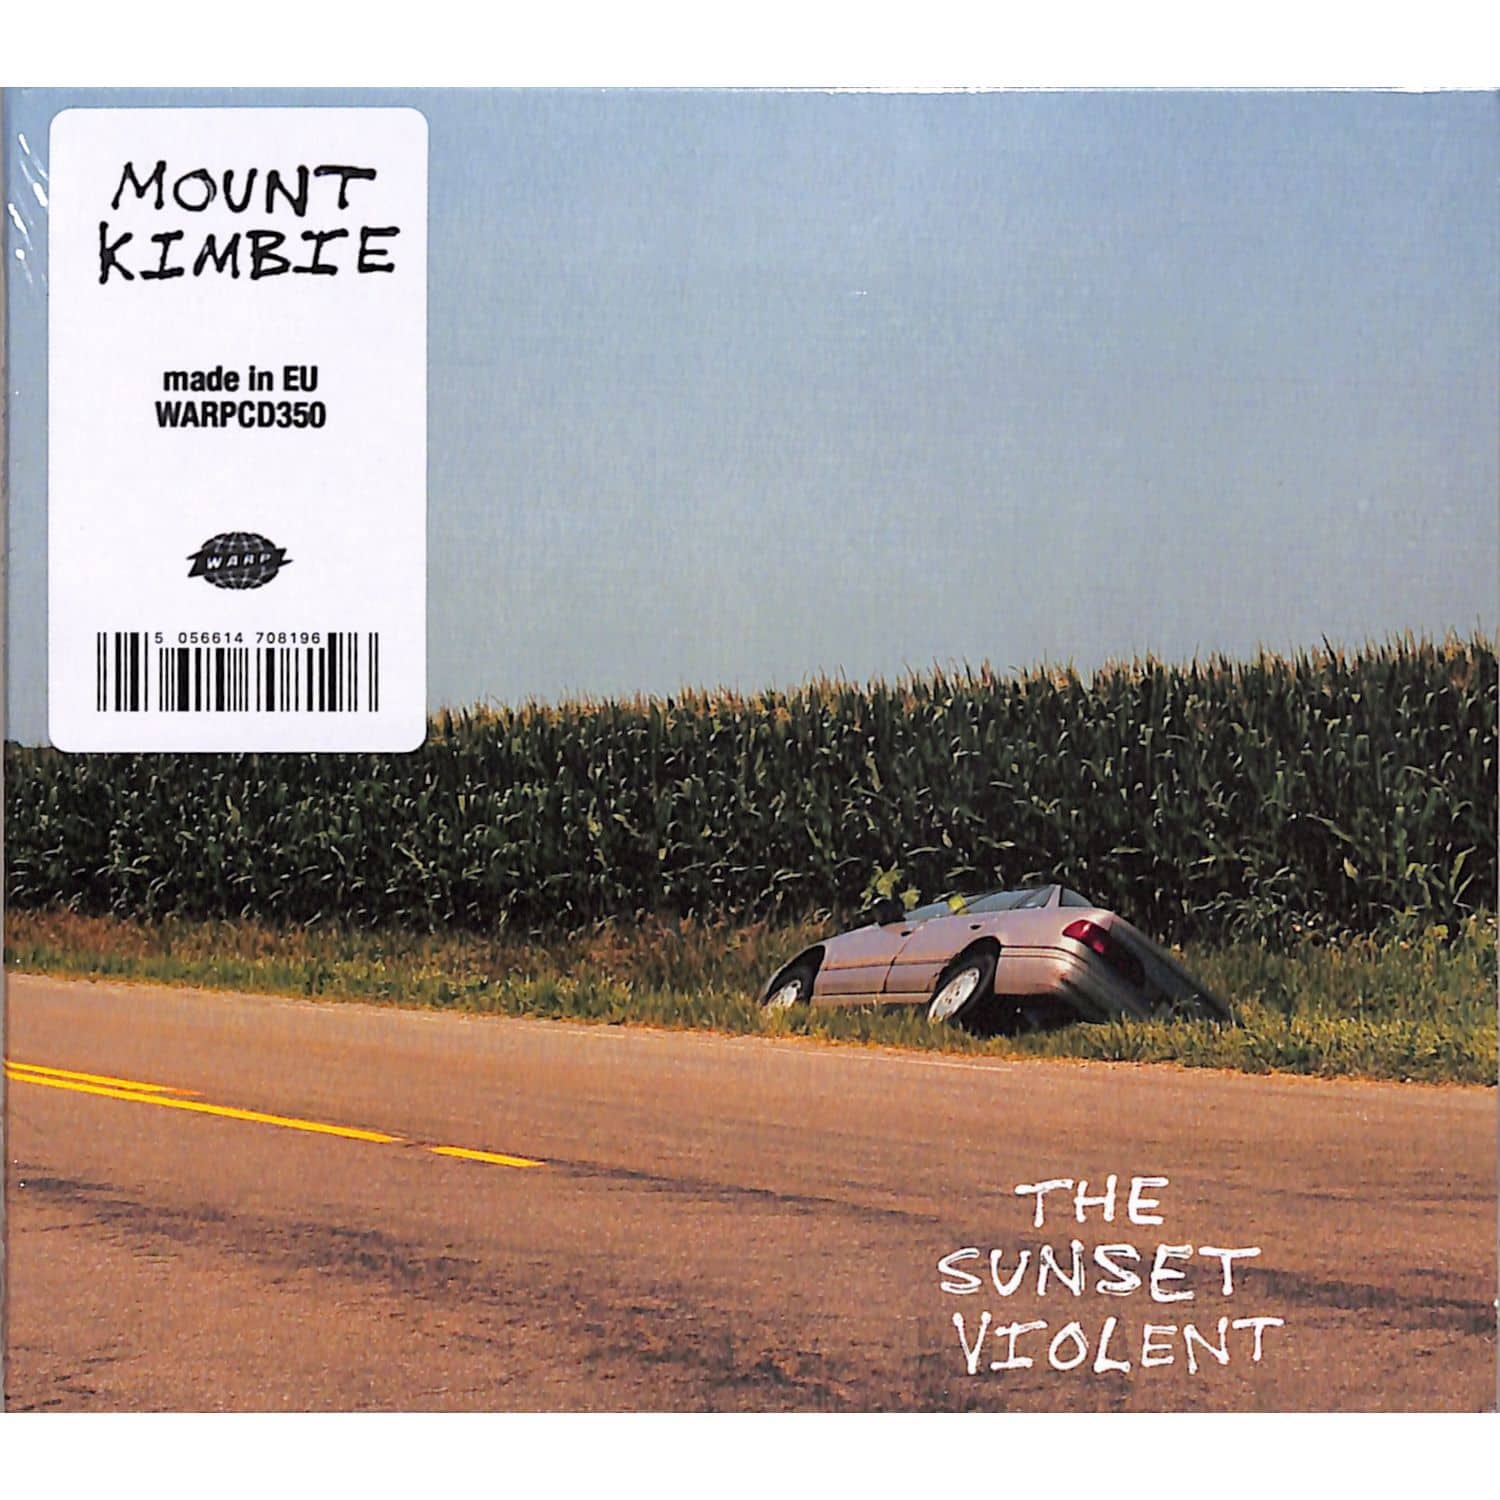 Mount Kimbie - THE SUNSET VIOLENT 